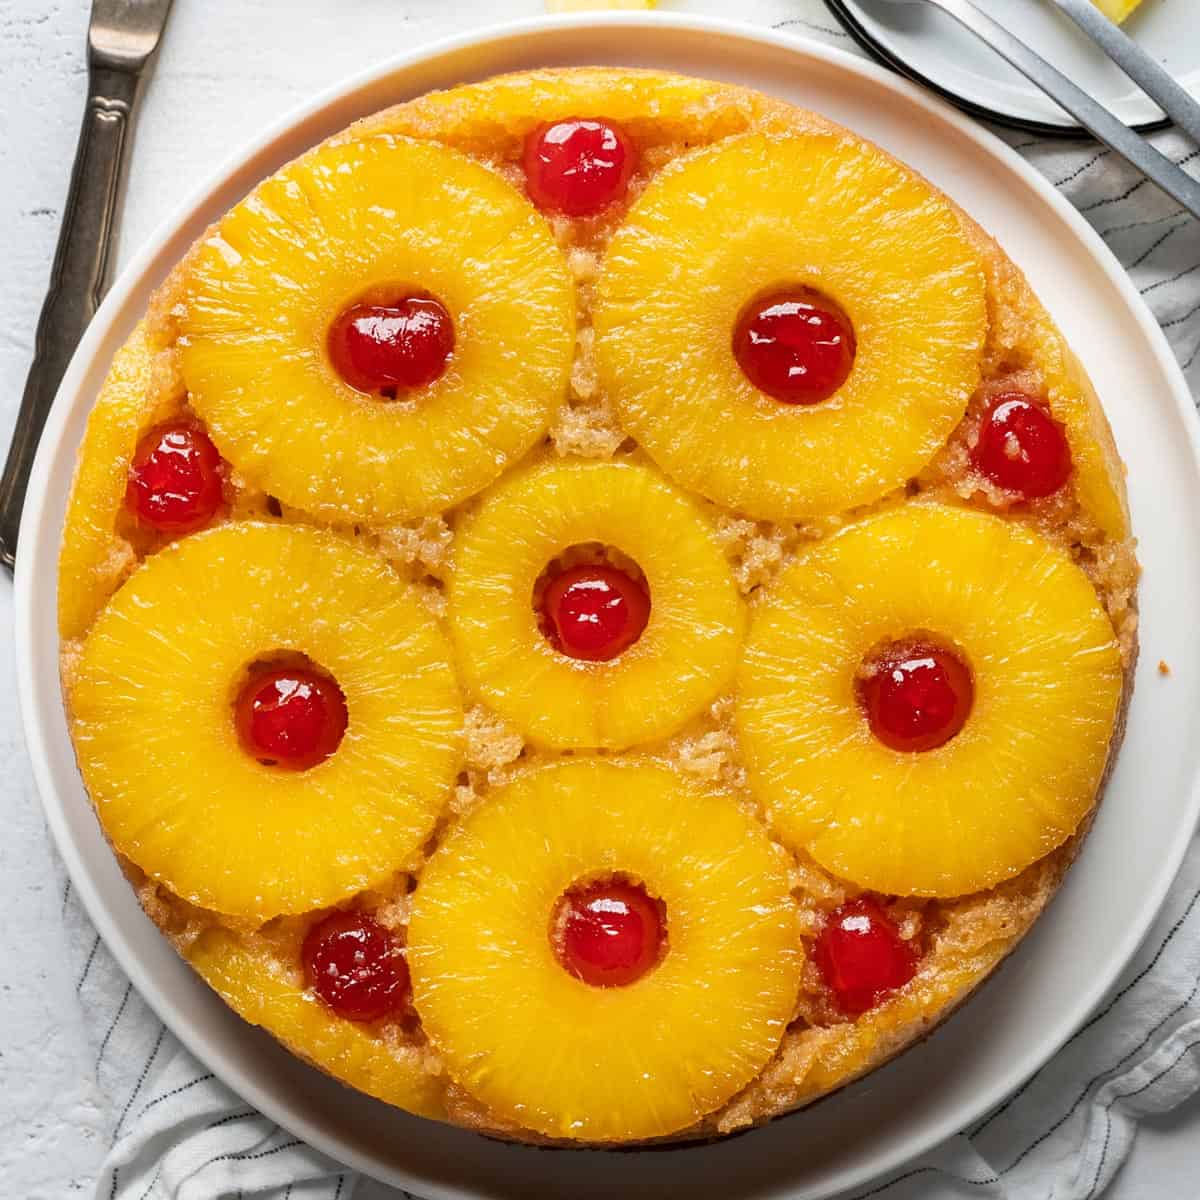 https://www.elmundoeats.com/wp-content/uploads/2022/08/FP-Healthy-upside-down-cake-in-a-plate-view-from-top.jpg